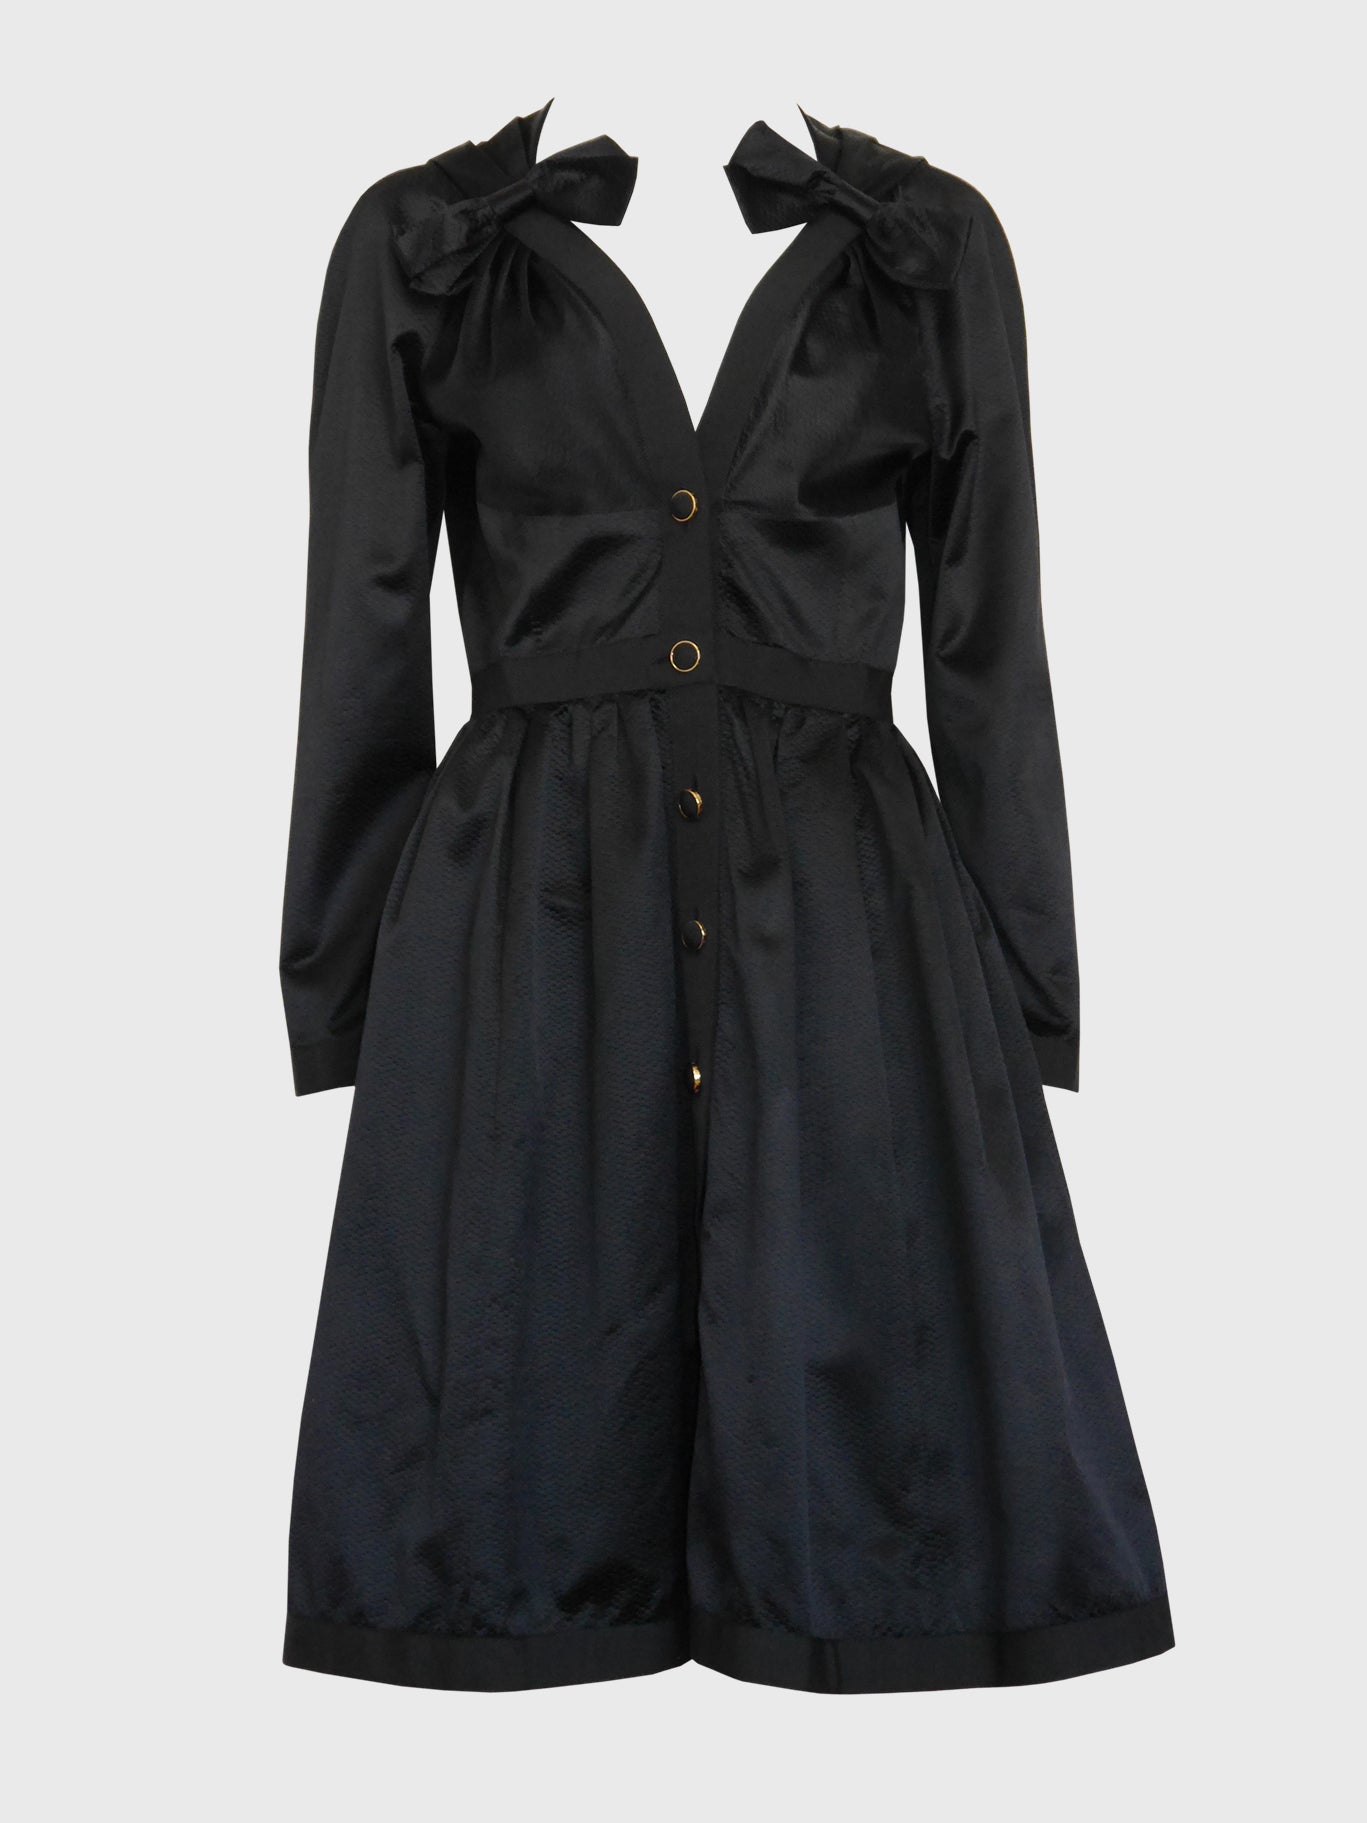 CHANEL by Karl Lagerfeld Fall 1991 Vintage Black Silk Evening Dress Runway Piece